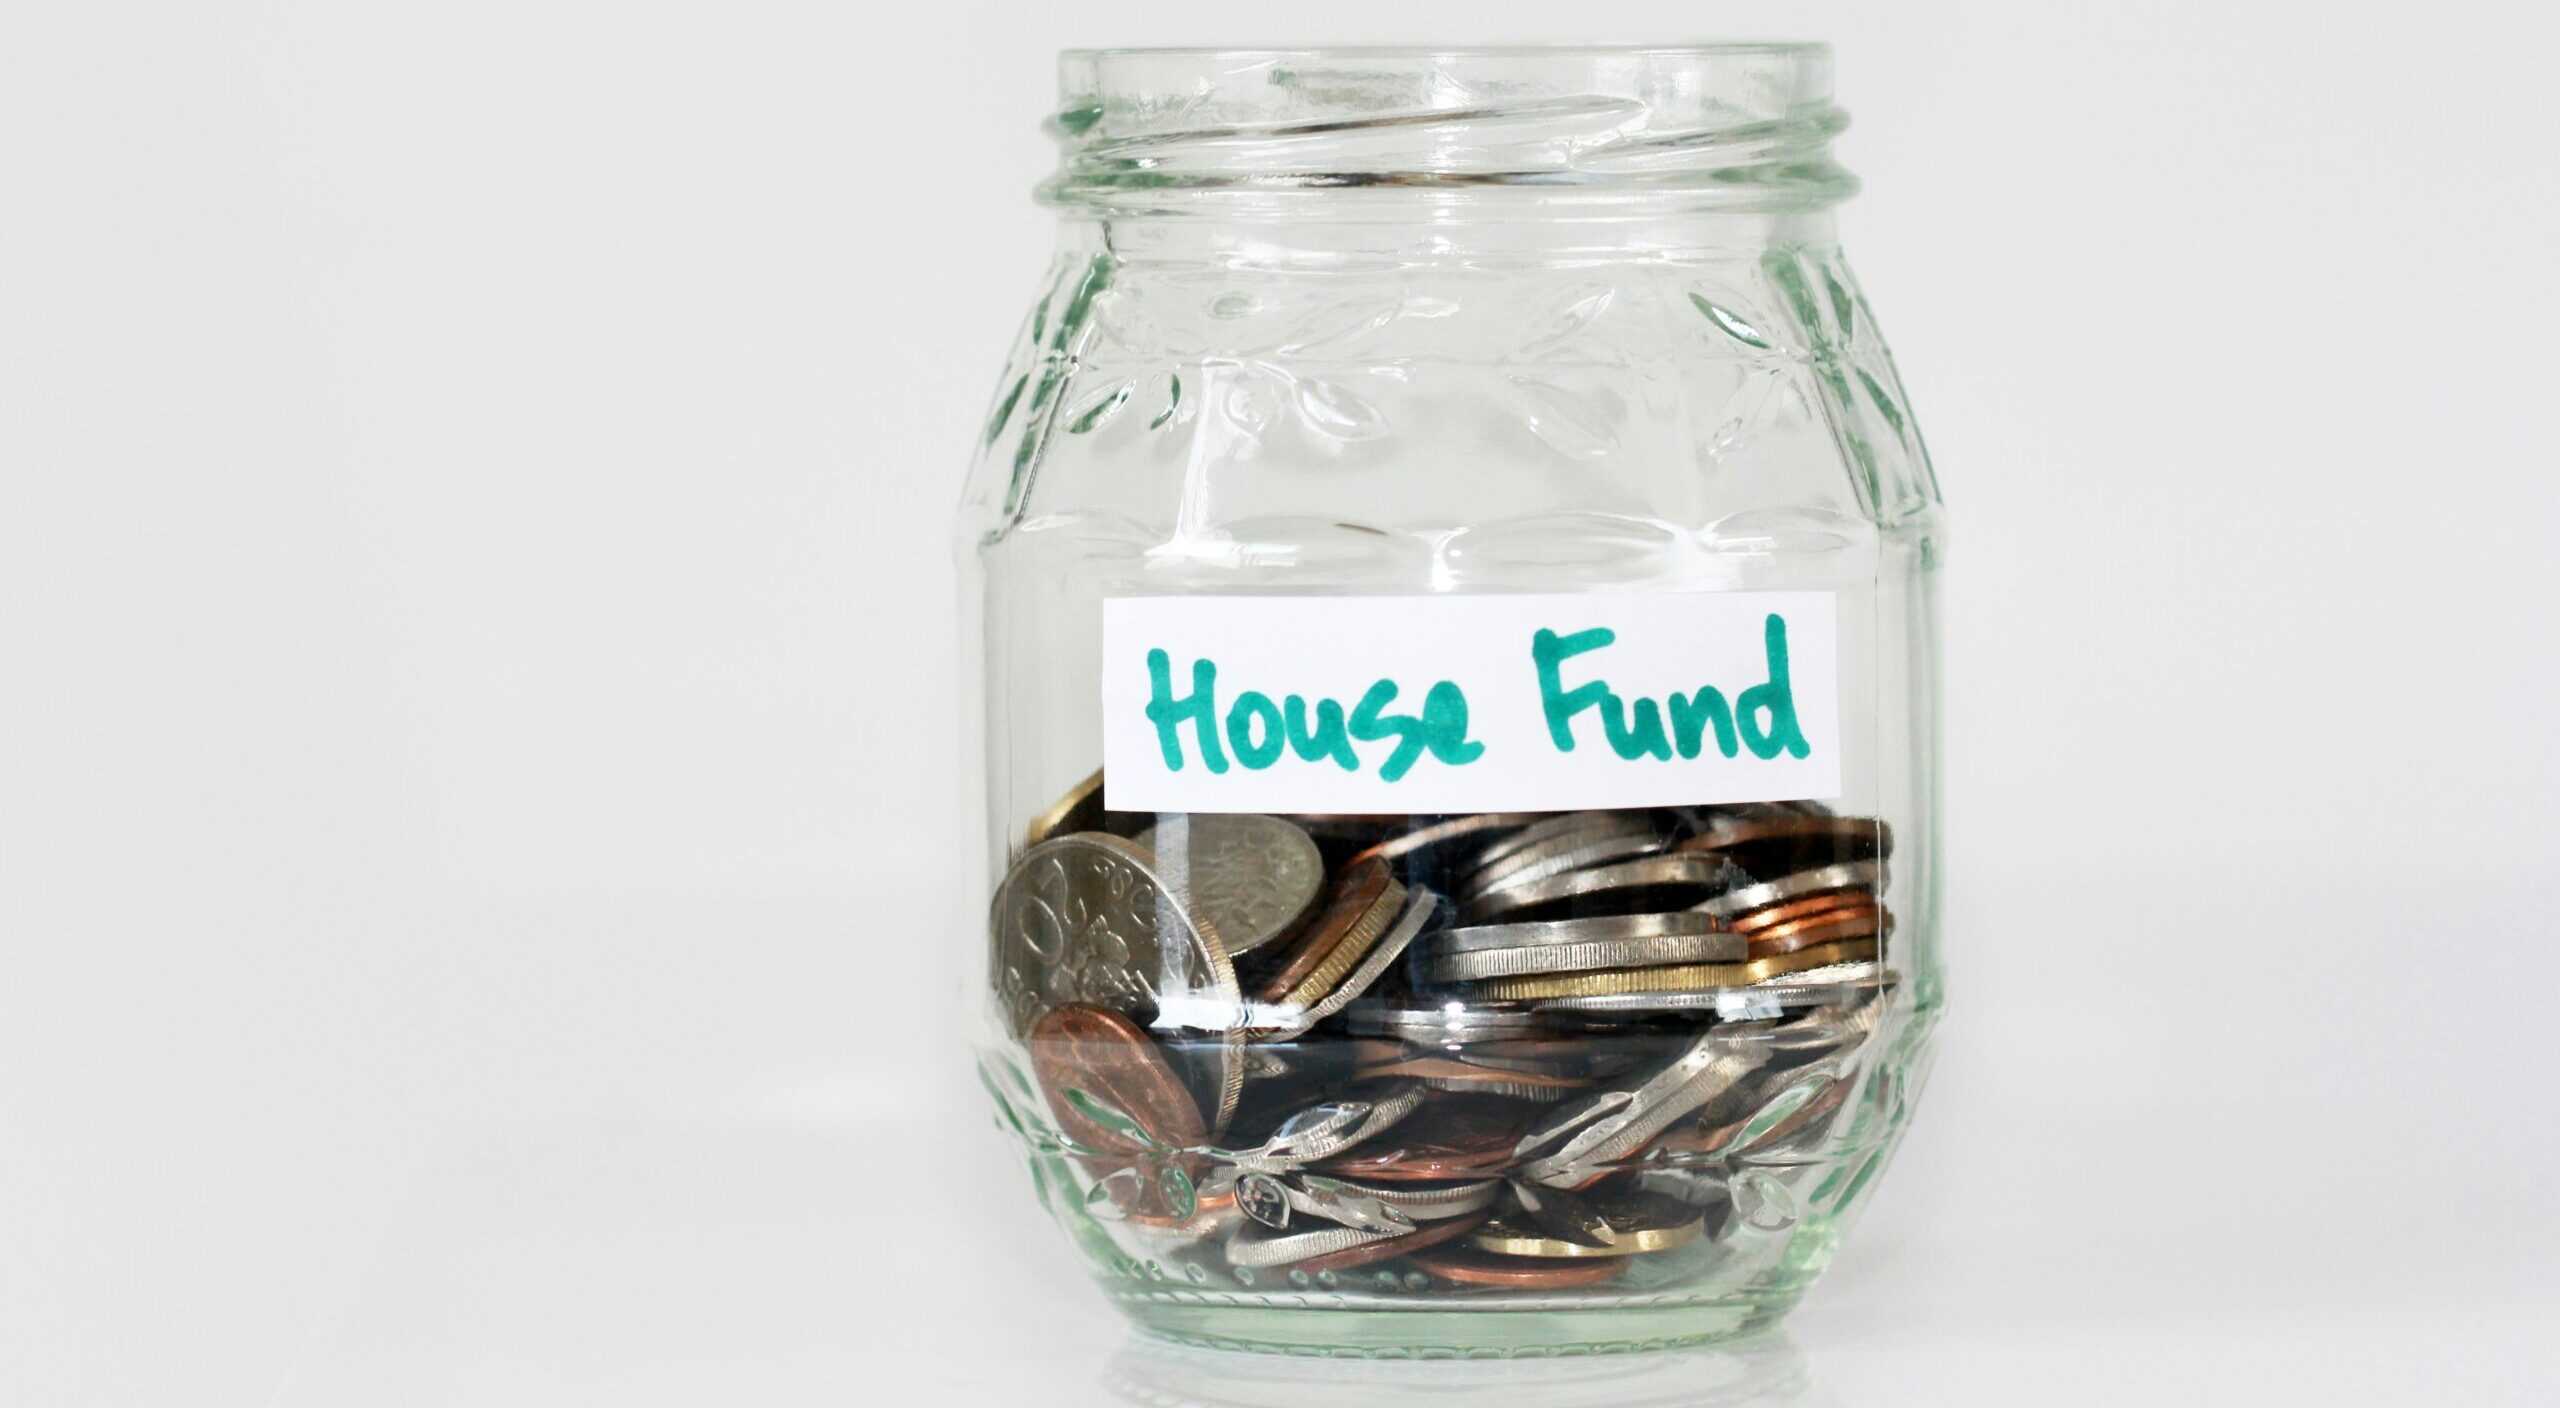 House fund coins in a jar